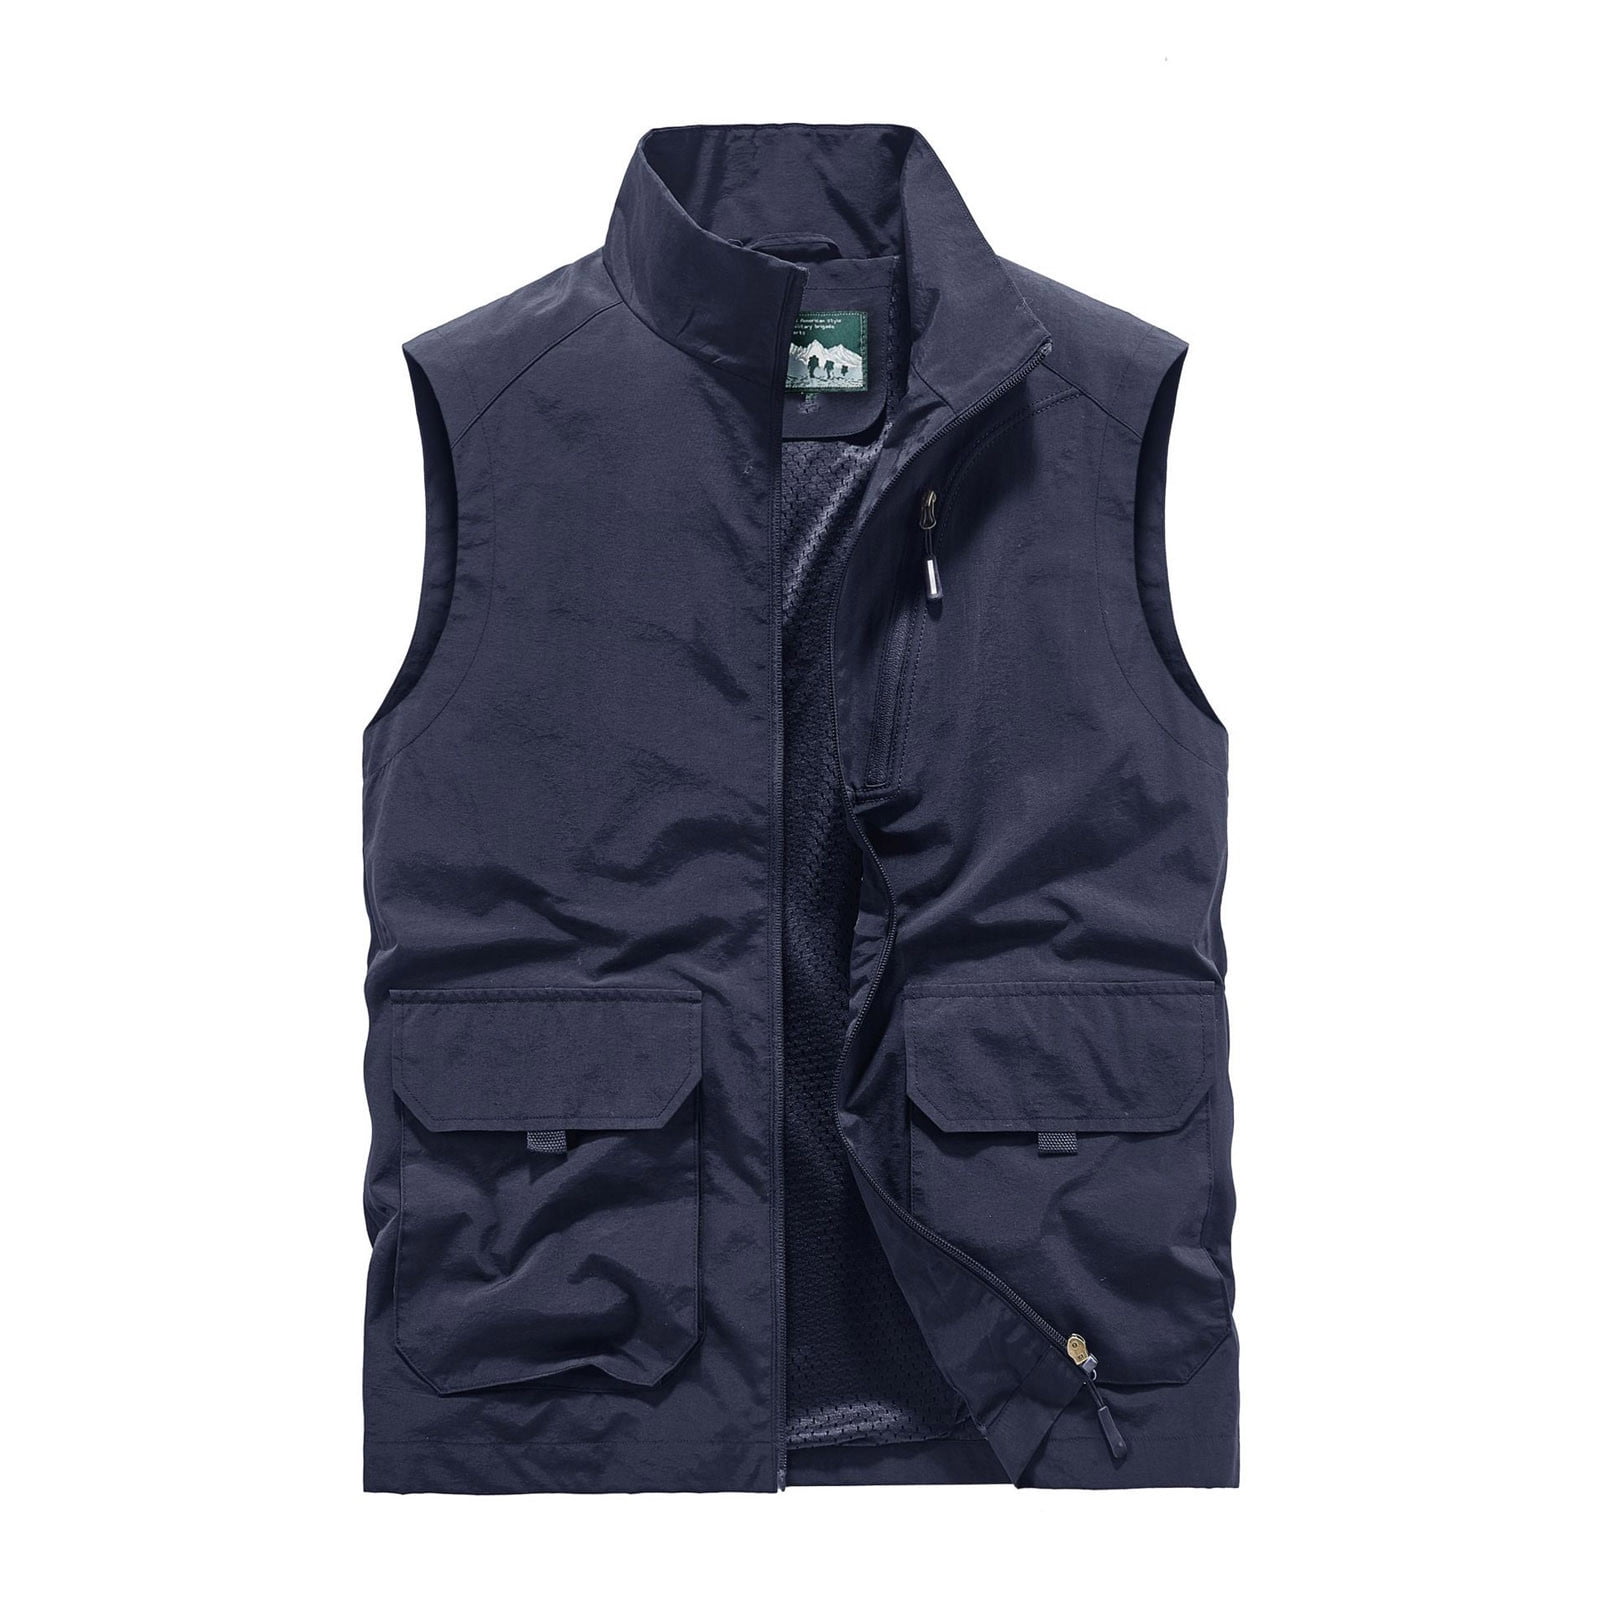 APEXFWDT Men's Fishing Vest Outdoor Work Hunting Utility Vest Quick-Dry  Safari Travel Vest Jacket with Multi Pockets 